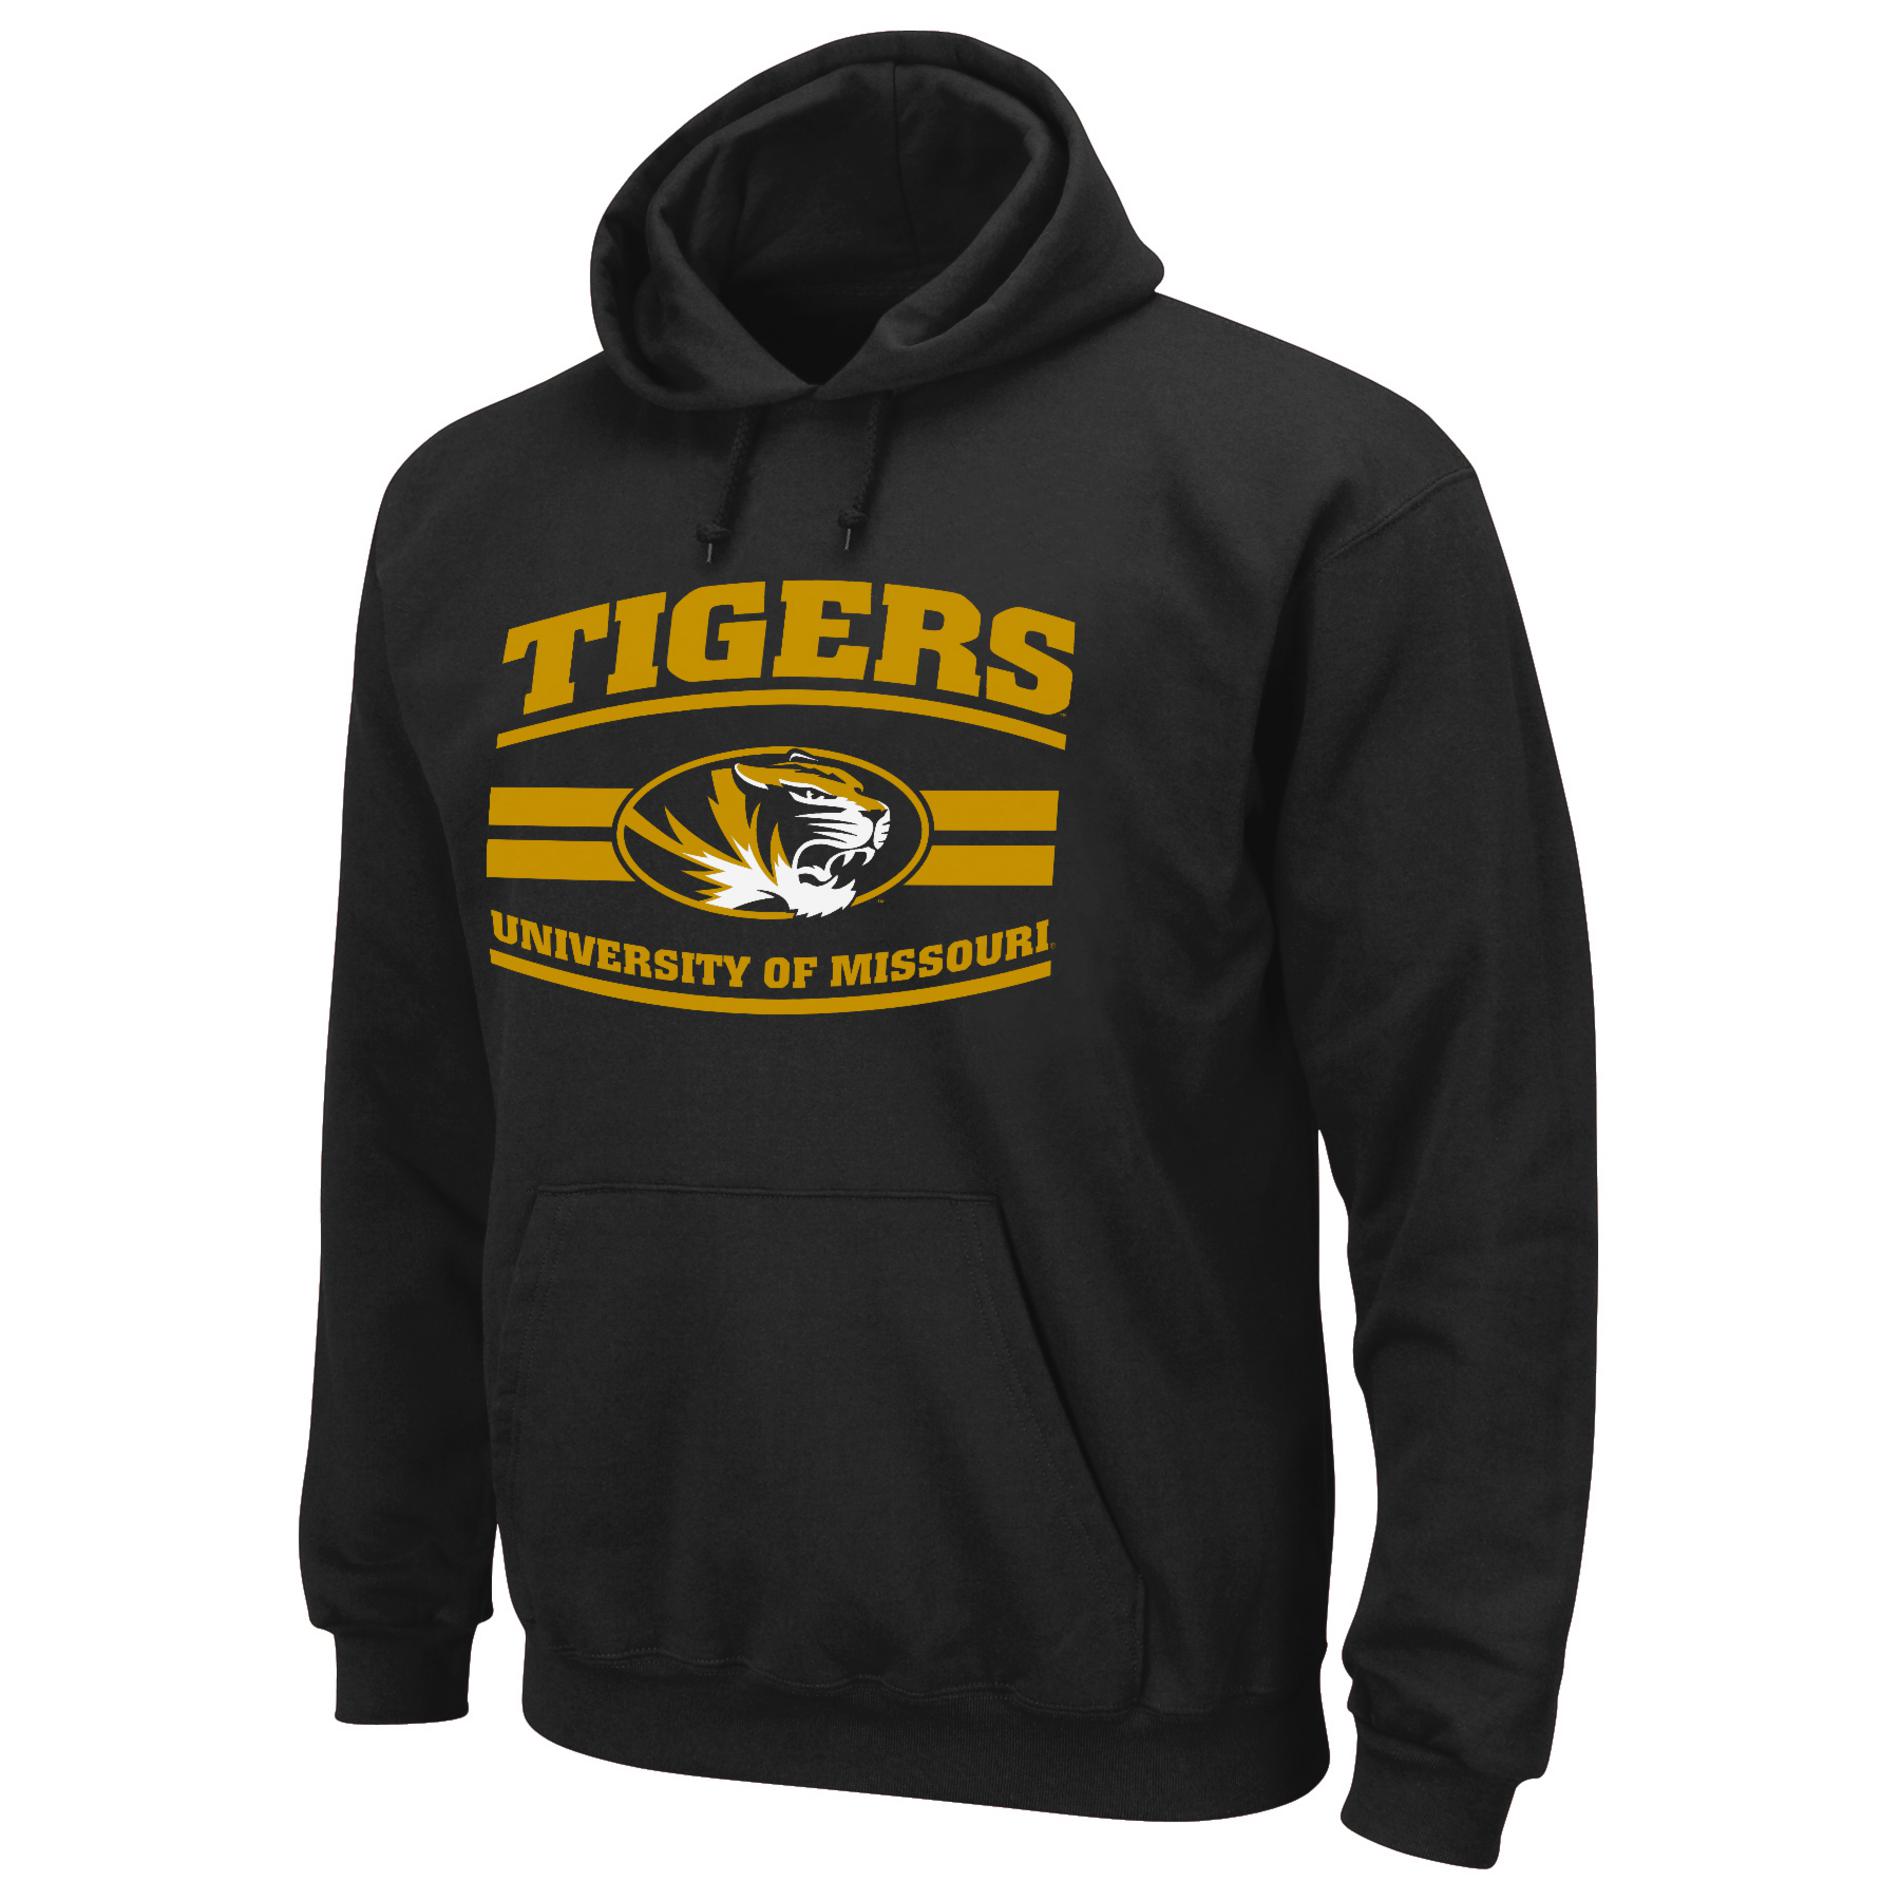 NCAA Men's Hooded Sweatshirt - University of Missouri Tigers